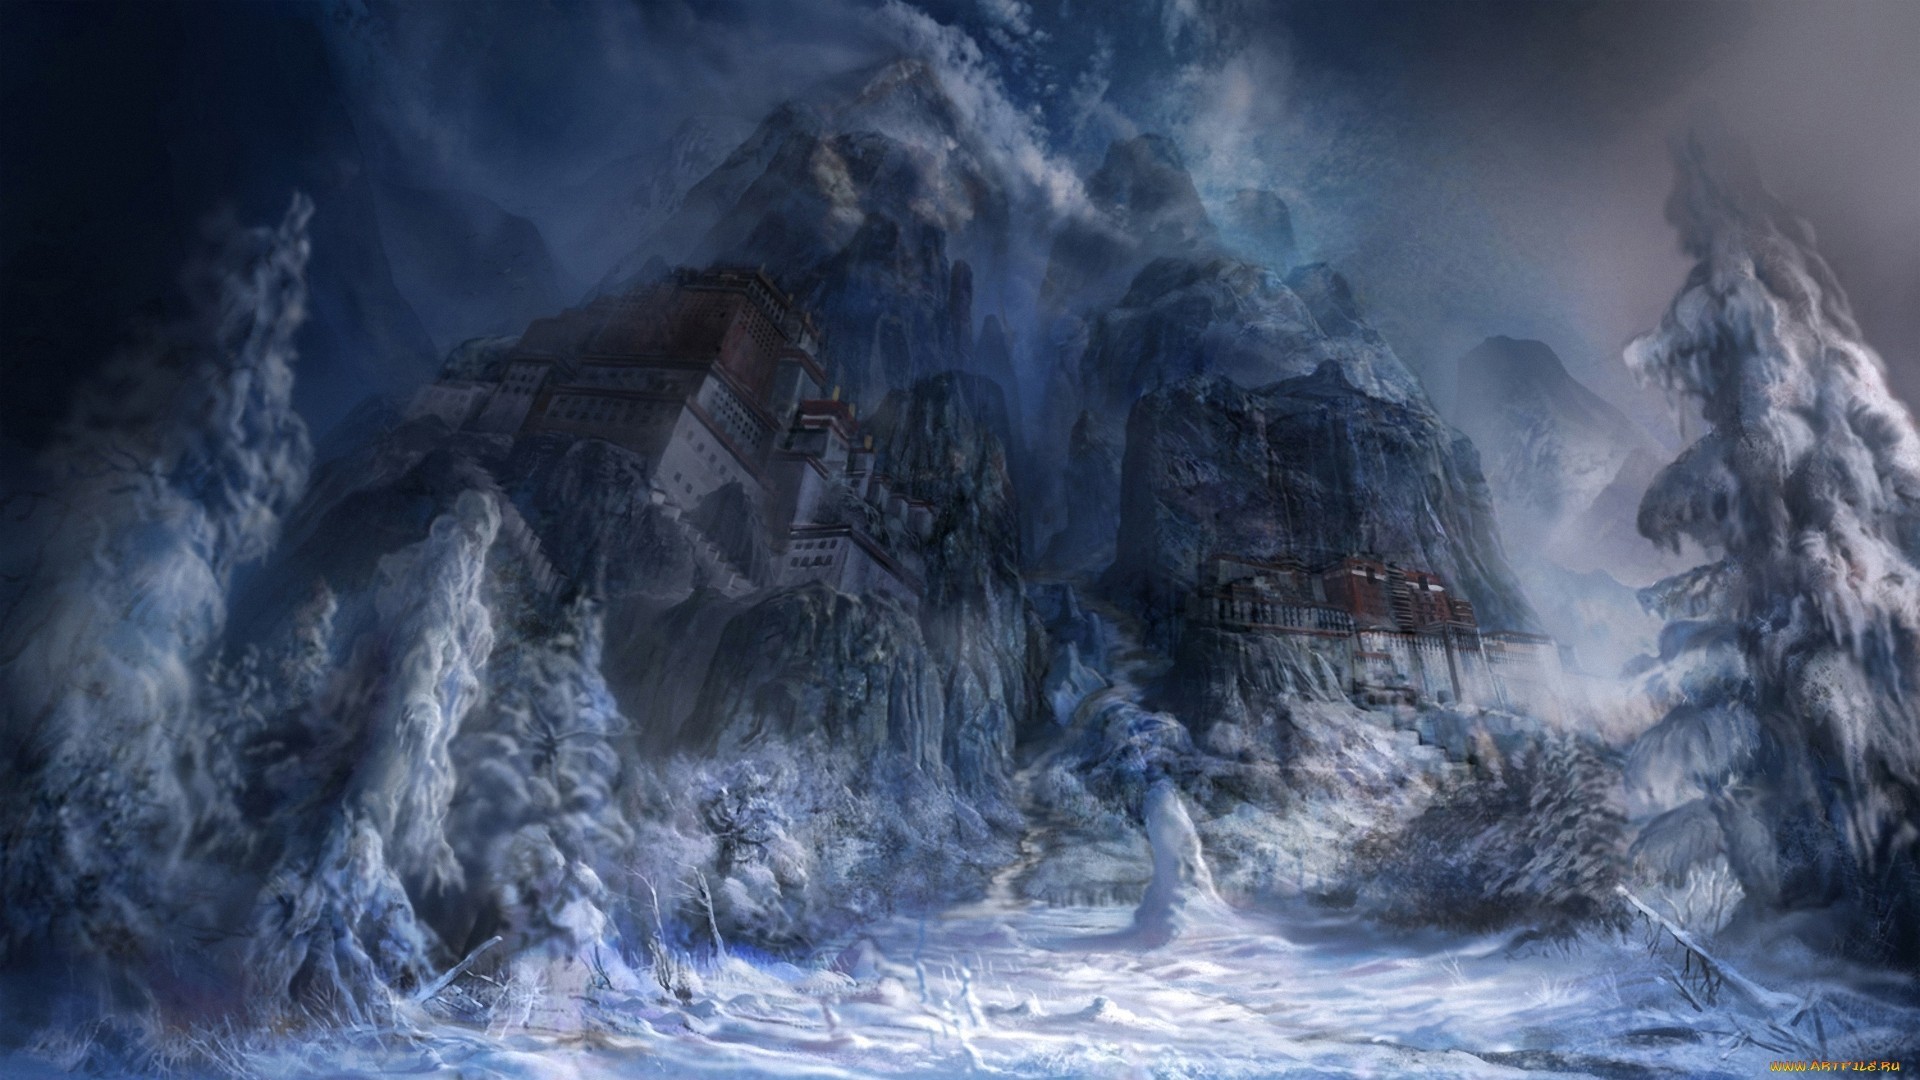 Dark Fantasy Wallpaper and HD Background free download on PicGaGa